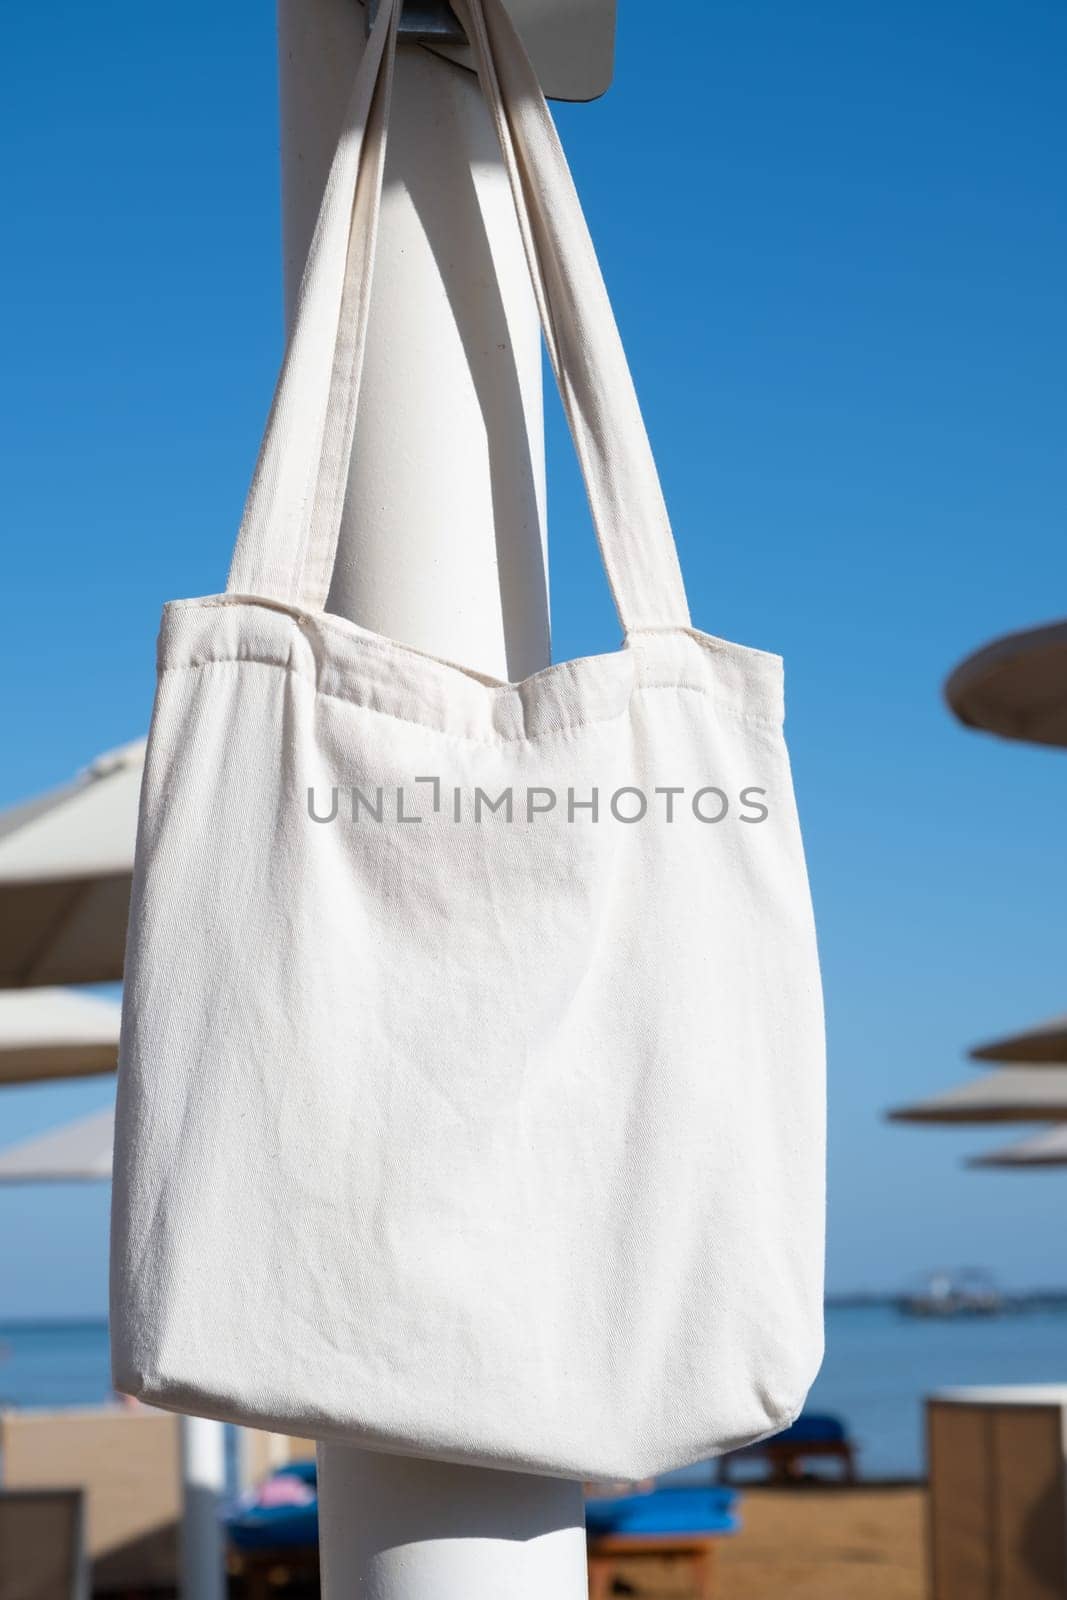 Mockup shopper handbag hanging on the beach. shopping eco reusable bag.